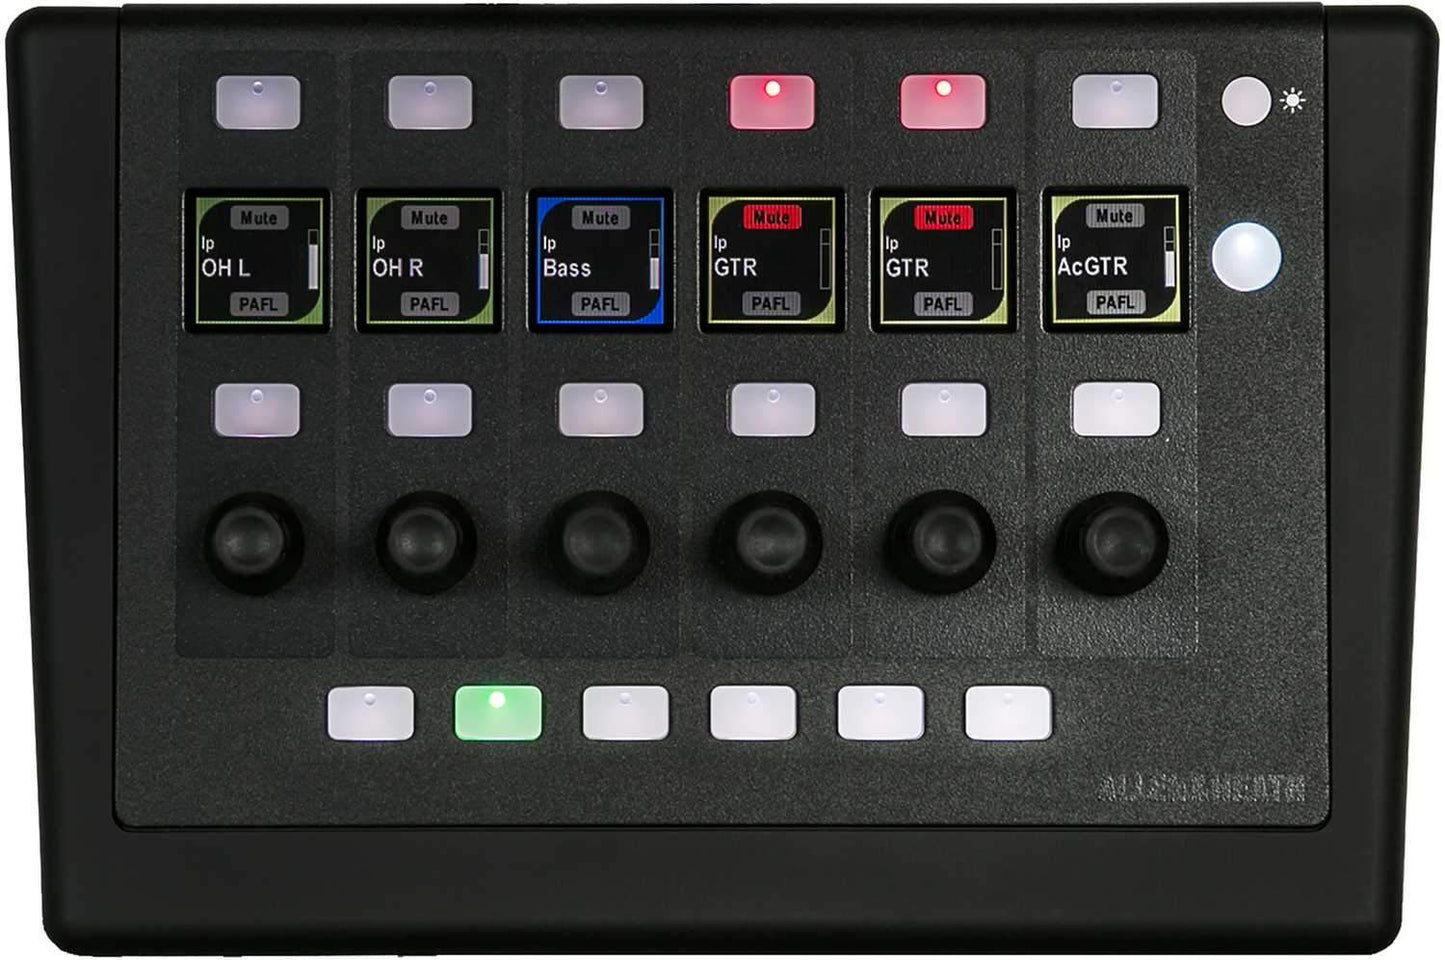 Allen & Heath IP-6 Remote Controller for dLive - PSSL ProSound and Stage Lighting